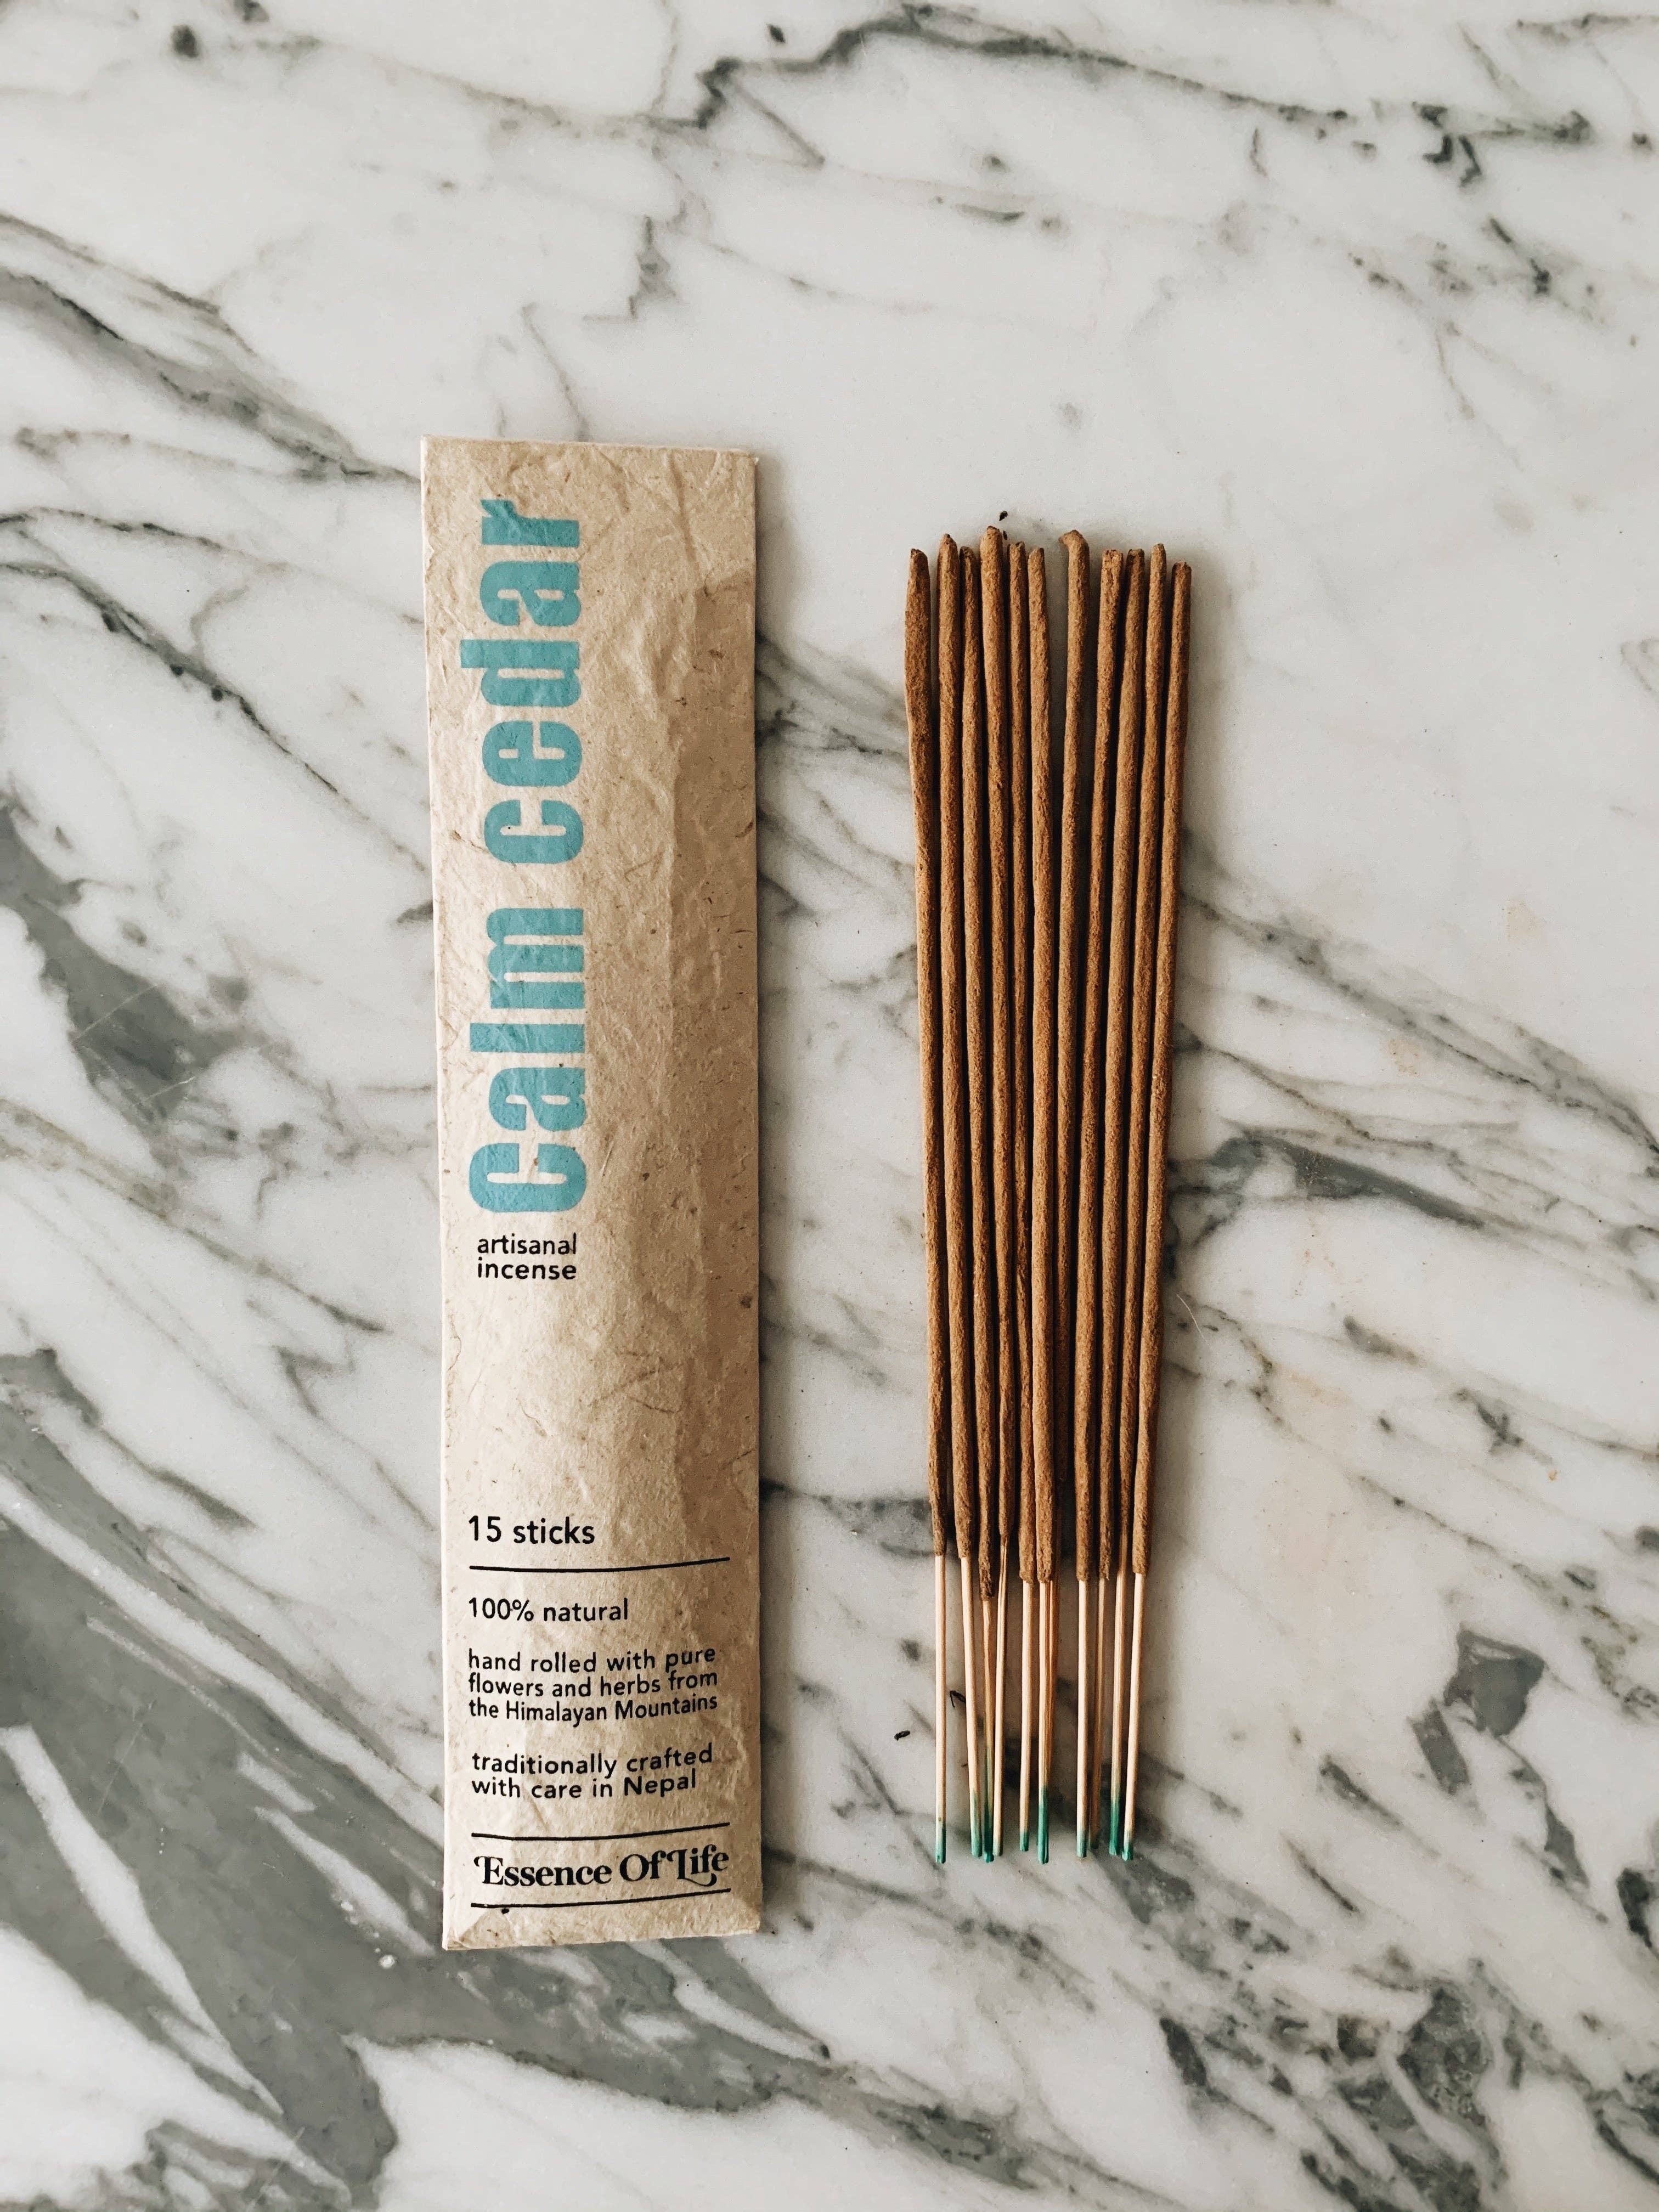 Essence of Life Handcrafted 100% Natural Artisanal incense, Calm Cedar